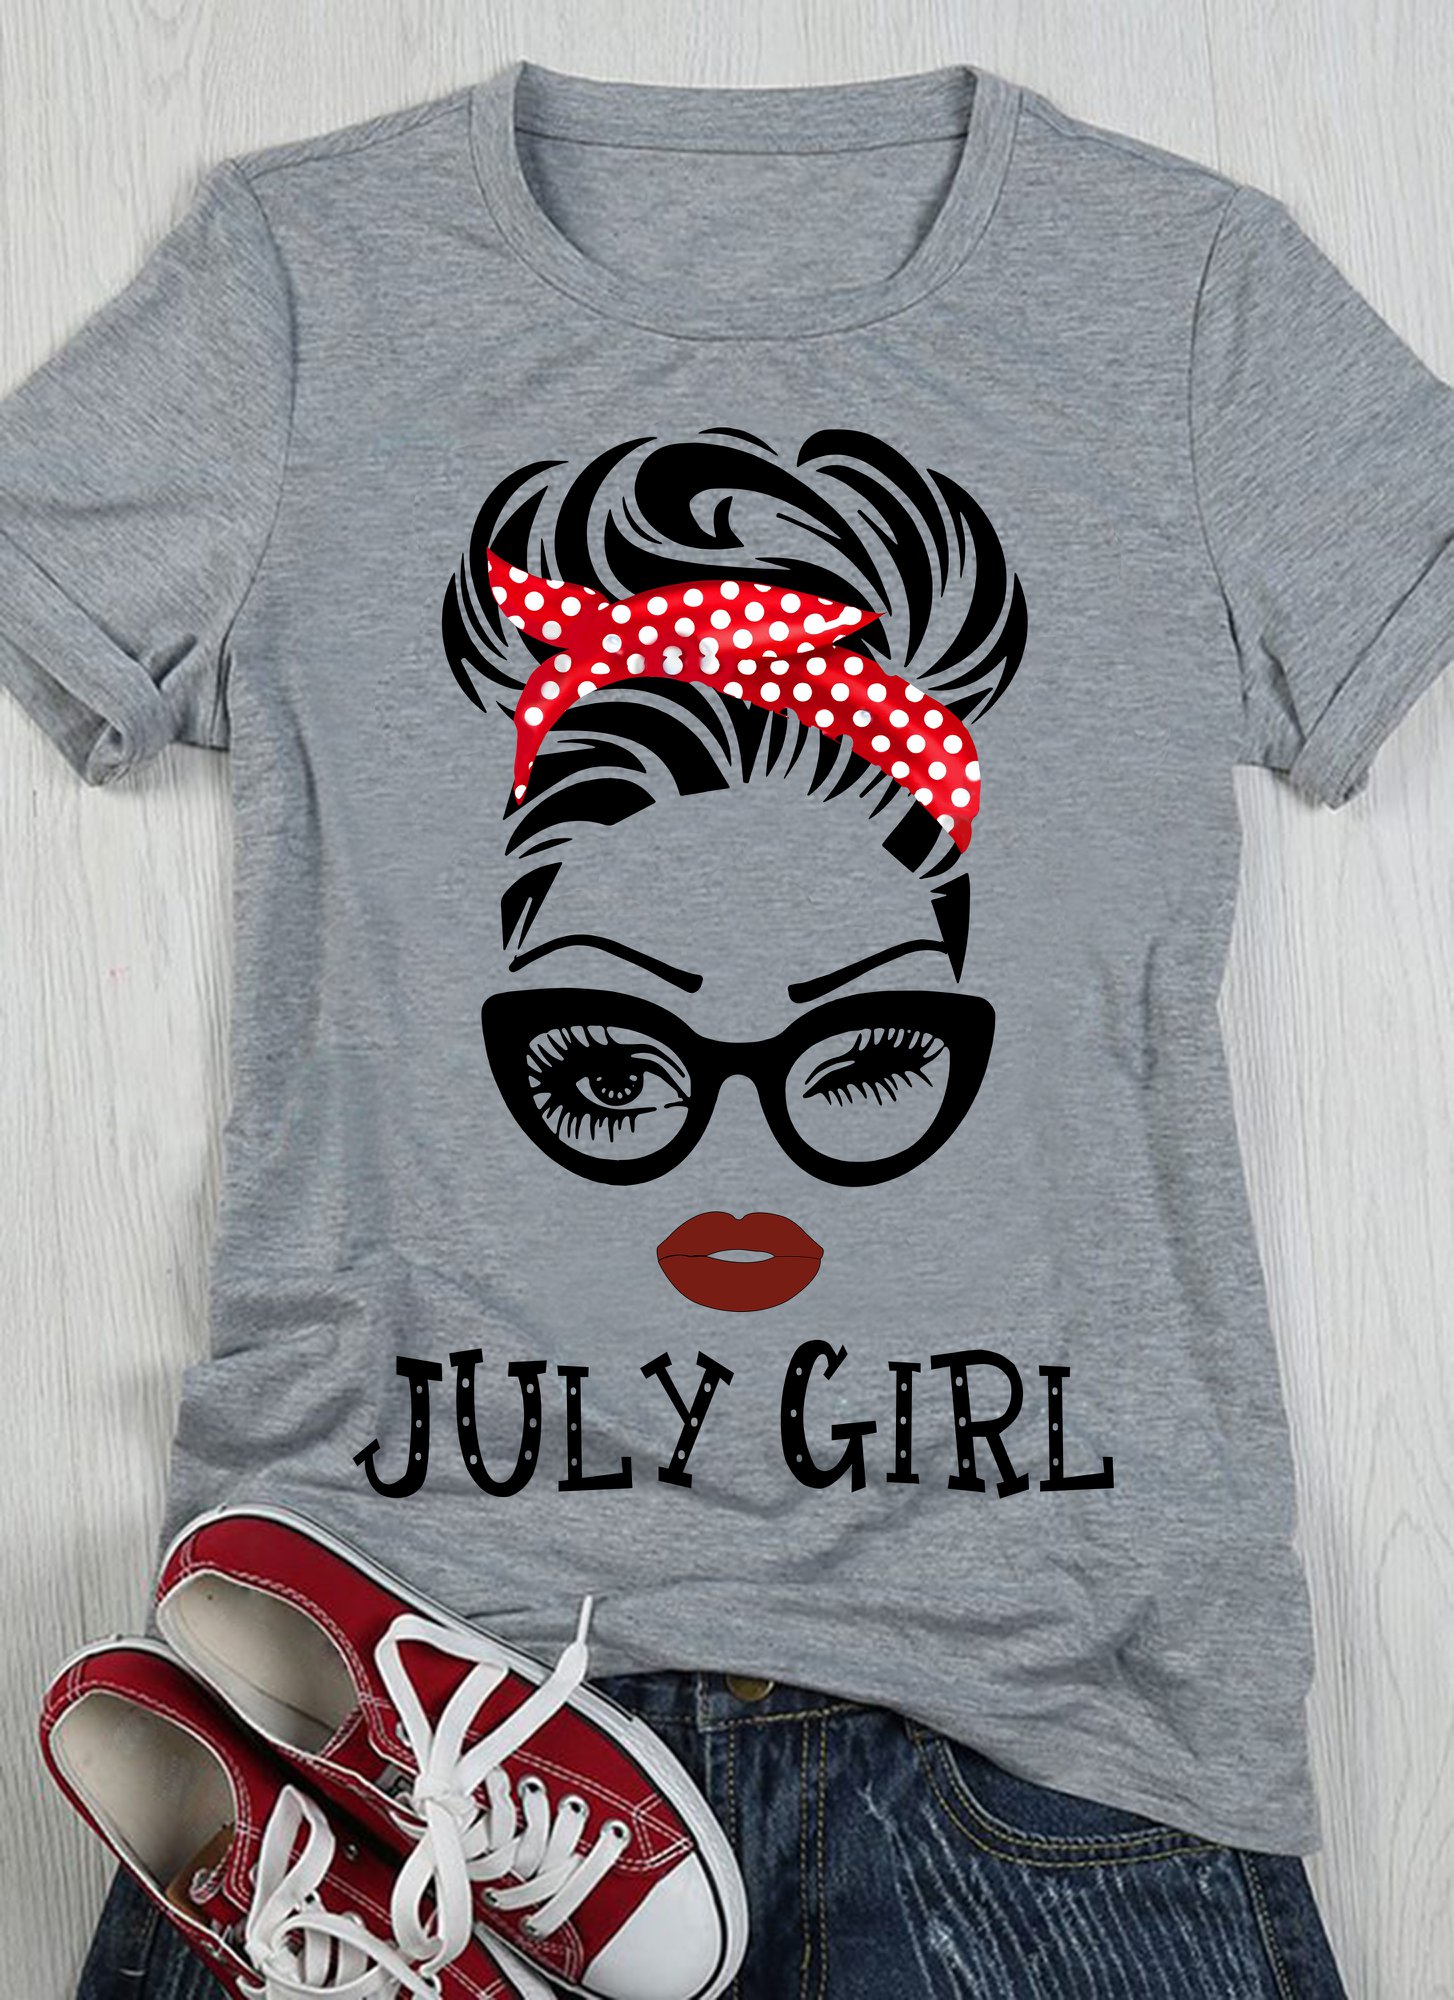 July girl July woman - Woman's face